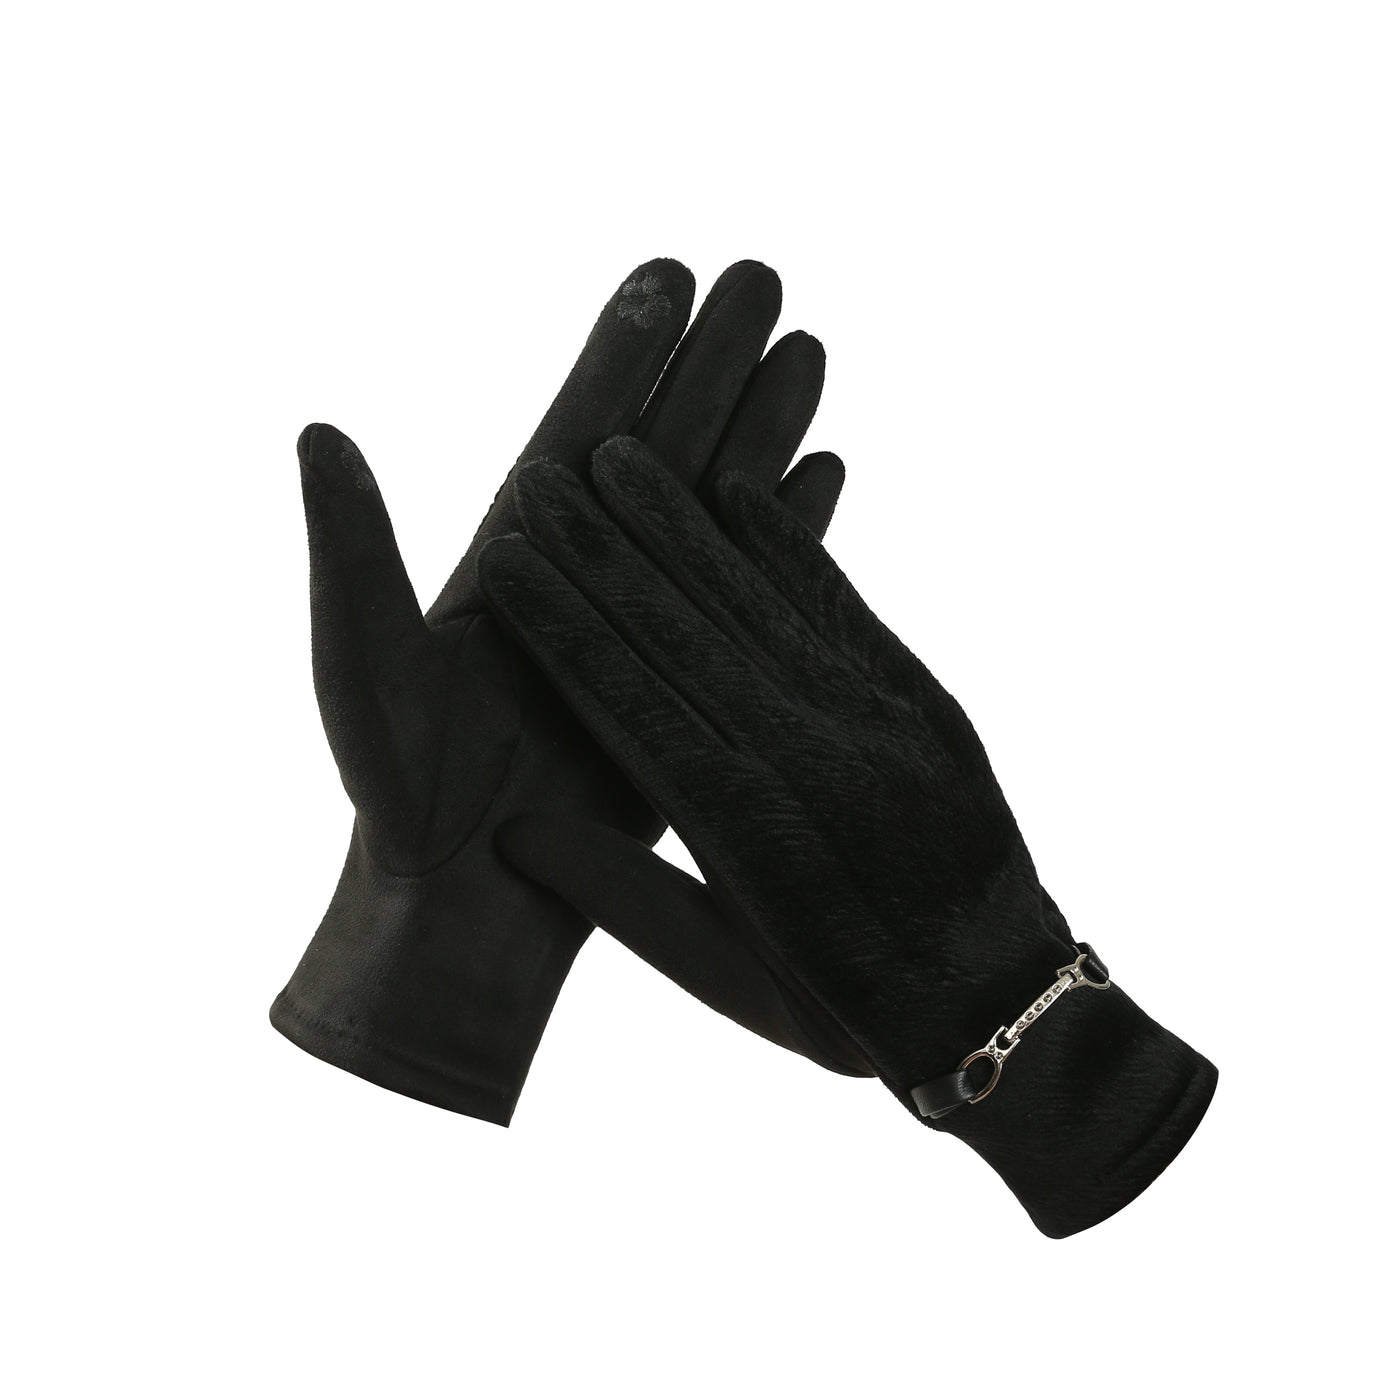 Women's Fashion Winter Gloves w/ Texting Finger - Velvety Stretch With Wrist Detail